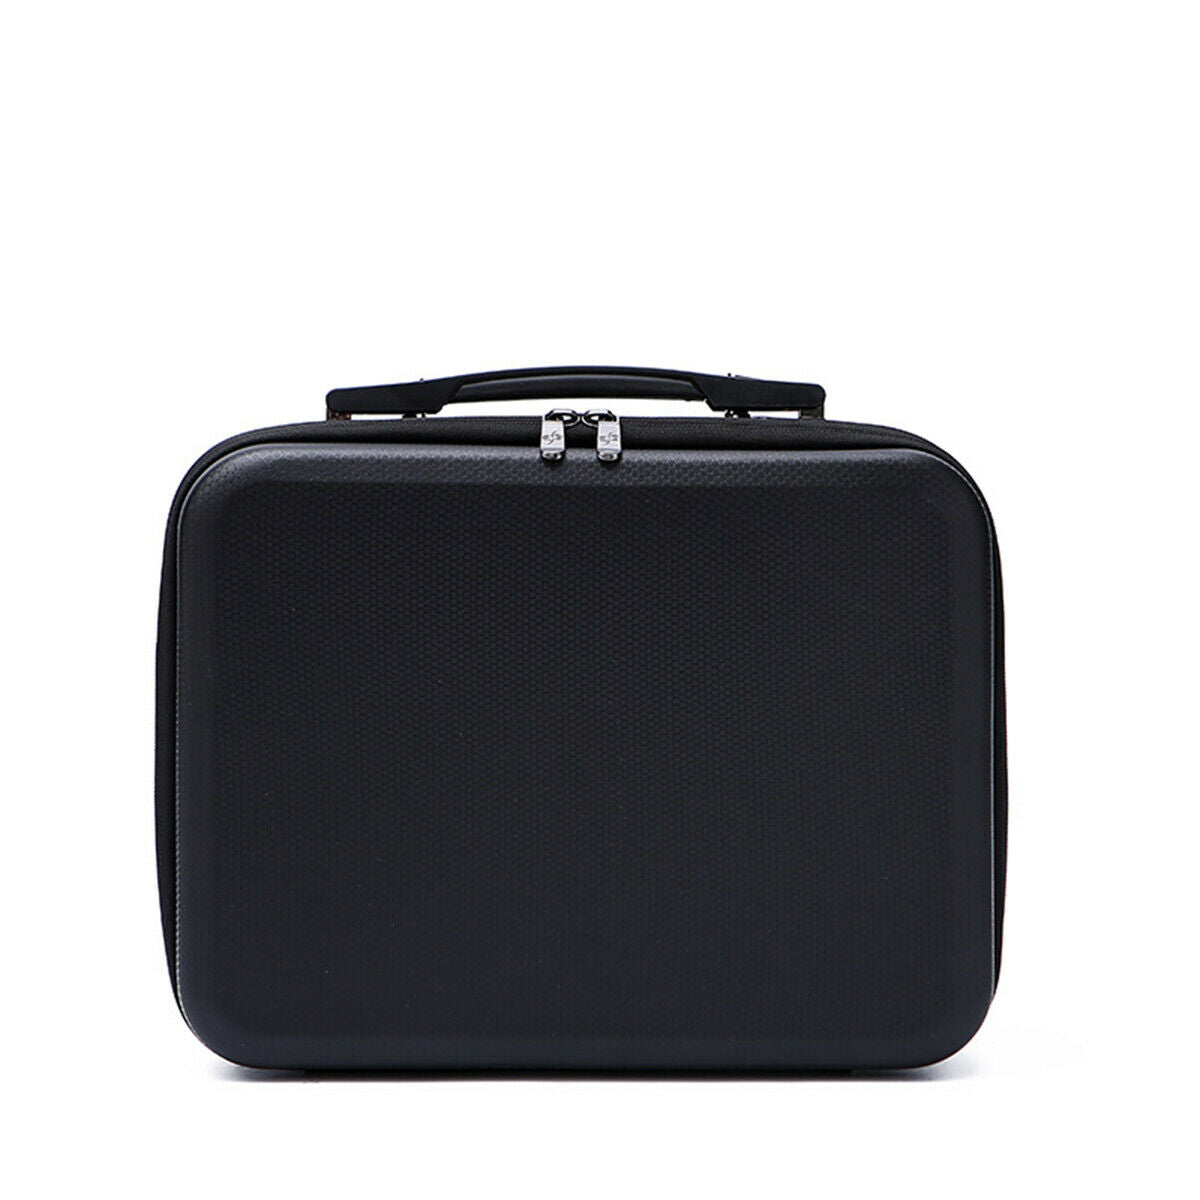 Portable Shoulder Bag Carrying Case for Zhiyun Weebill 2 Stabilizer Storage Box